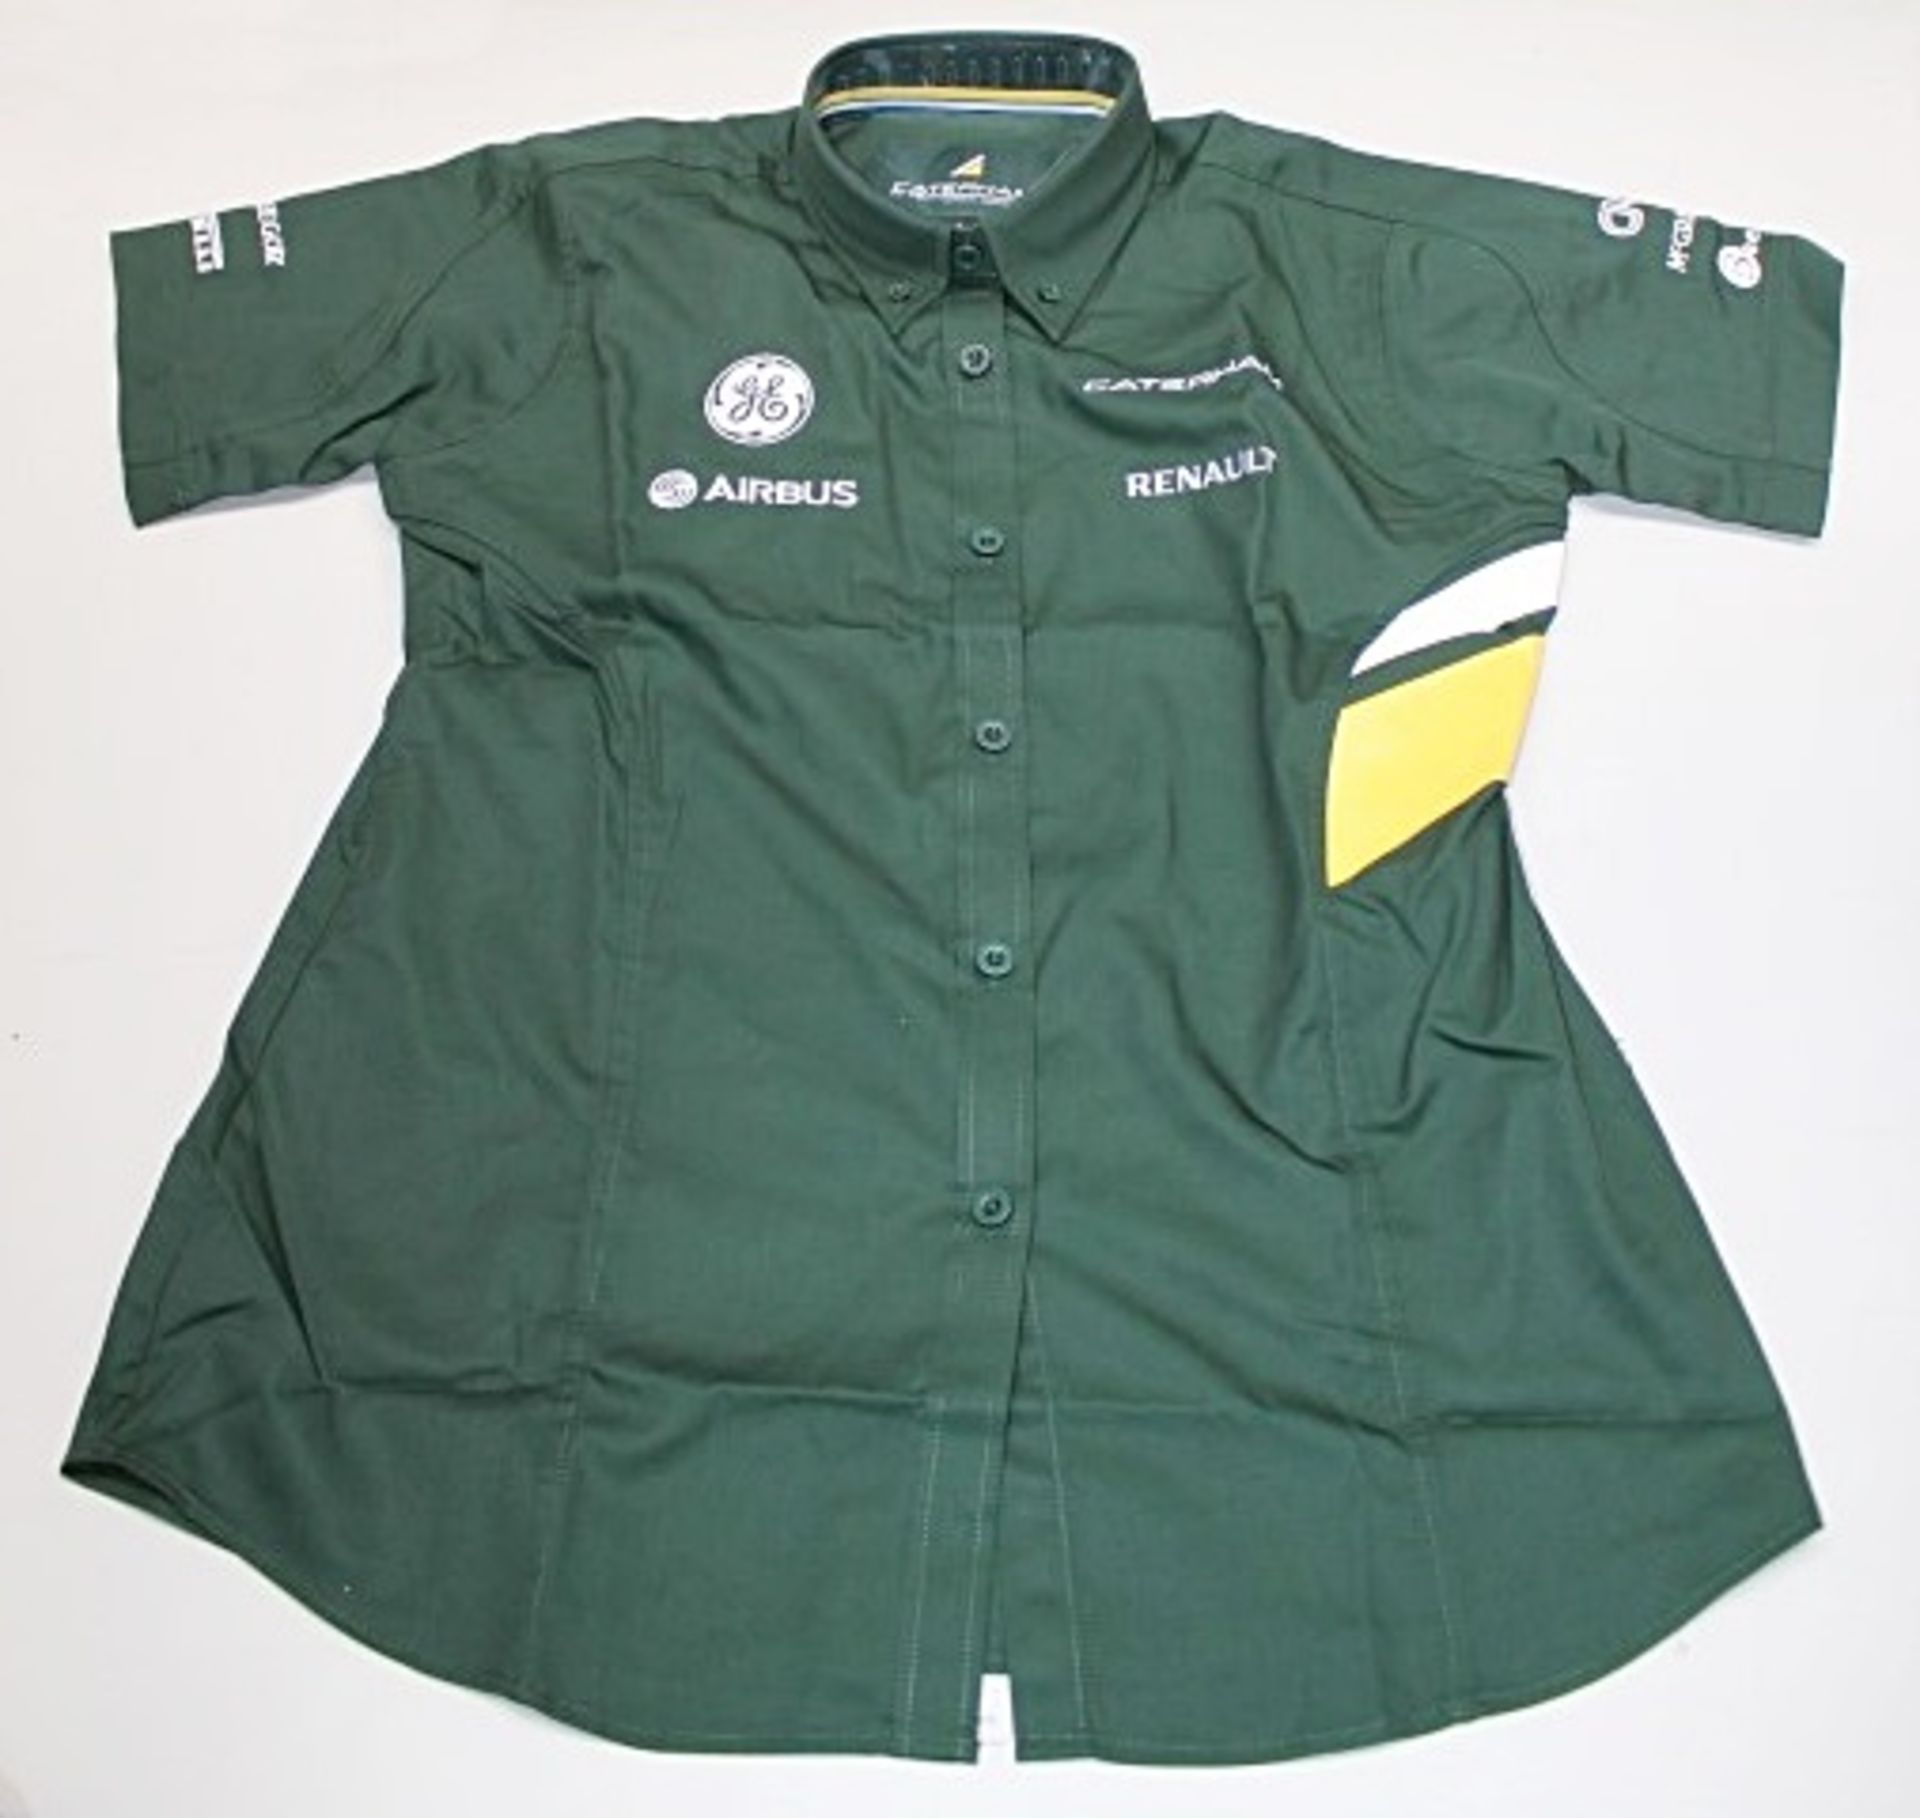 10 x CATERHAM F1 Team Engineer Race Shirts - Short Sleeved - Size: X-Large - Ref: JIM040B -